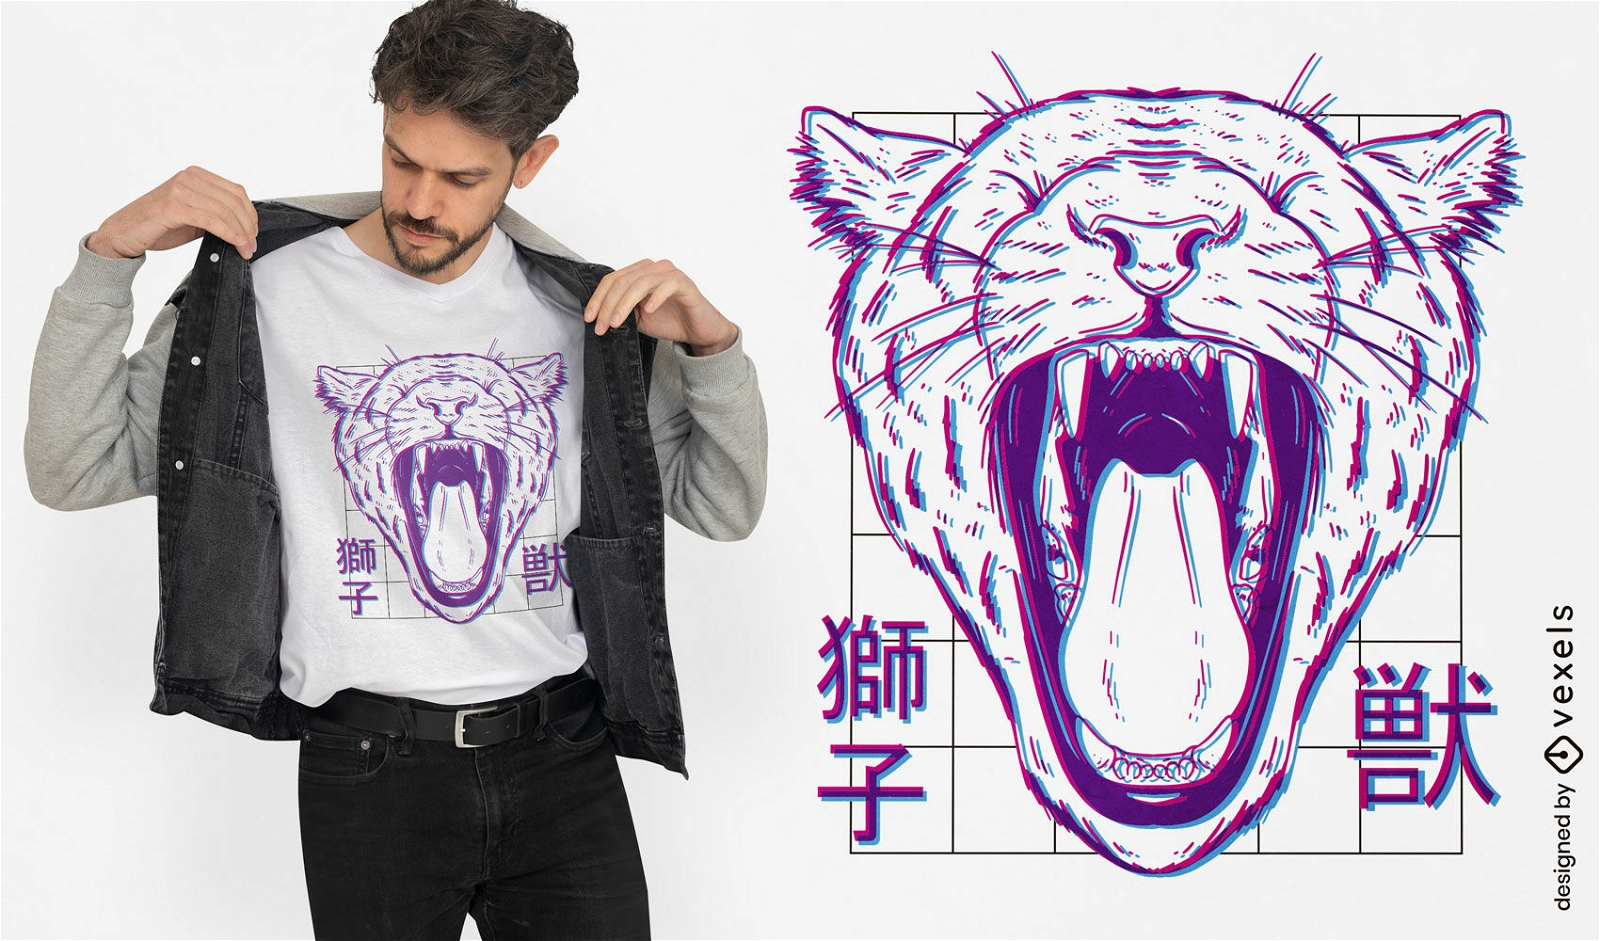 Roaring lioness blurred t-shirt design